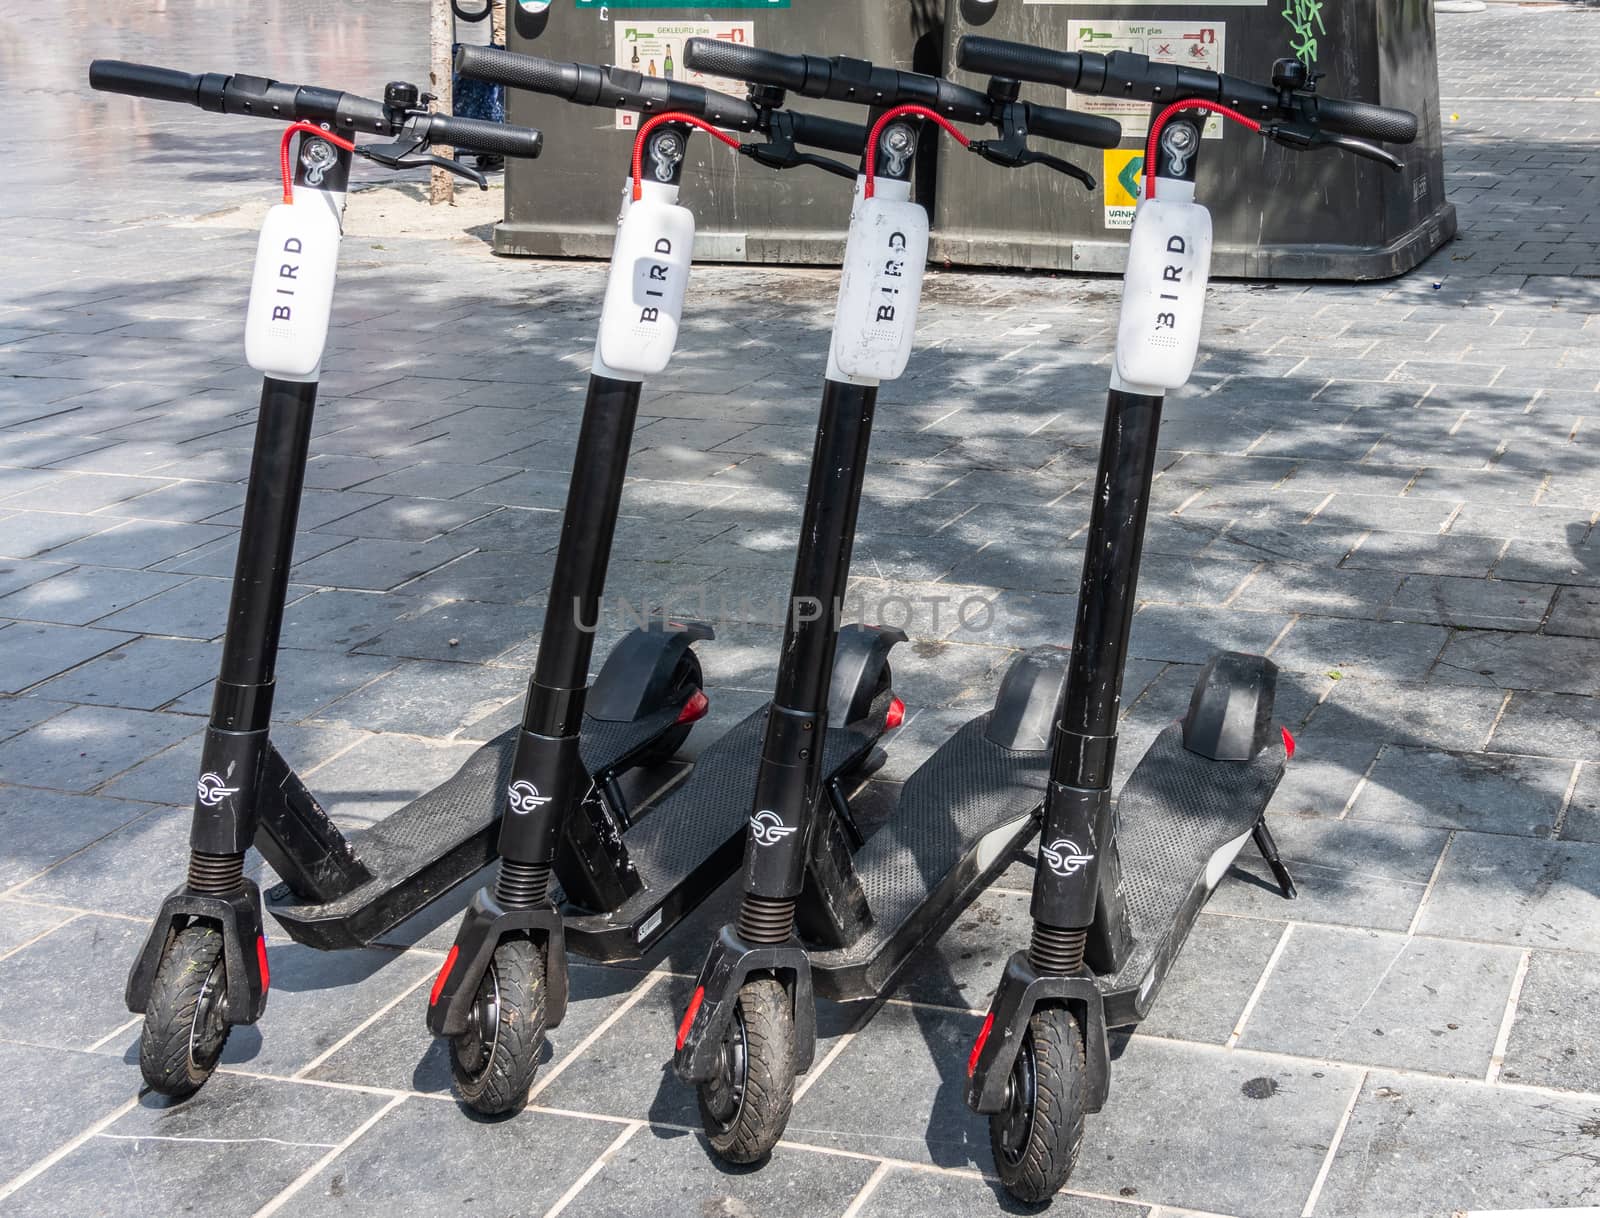 Four Bird scooters parked in Antwerpen, Belgium. by Claudine